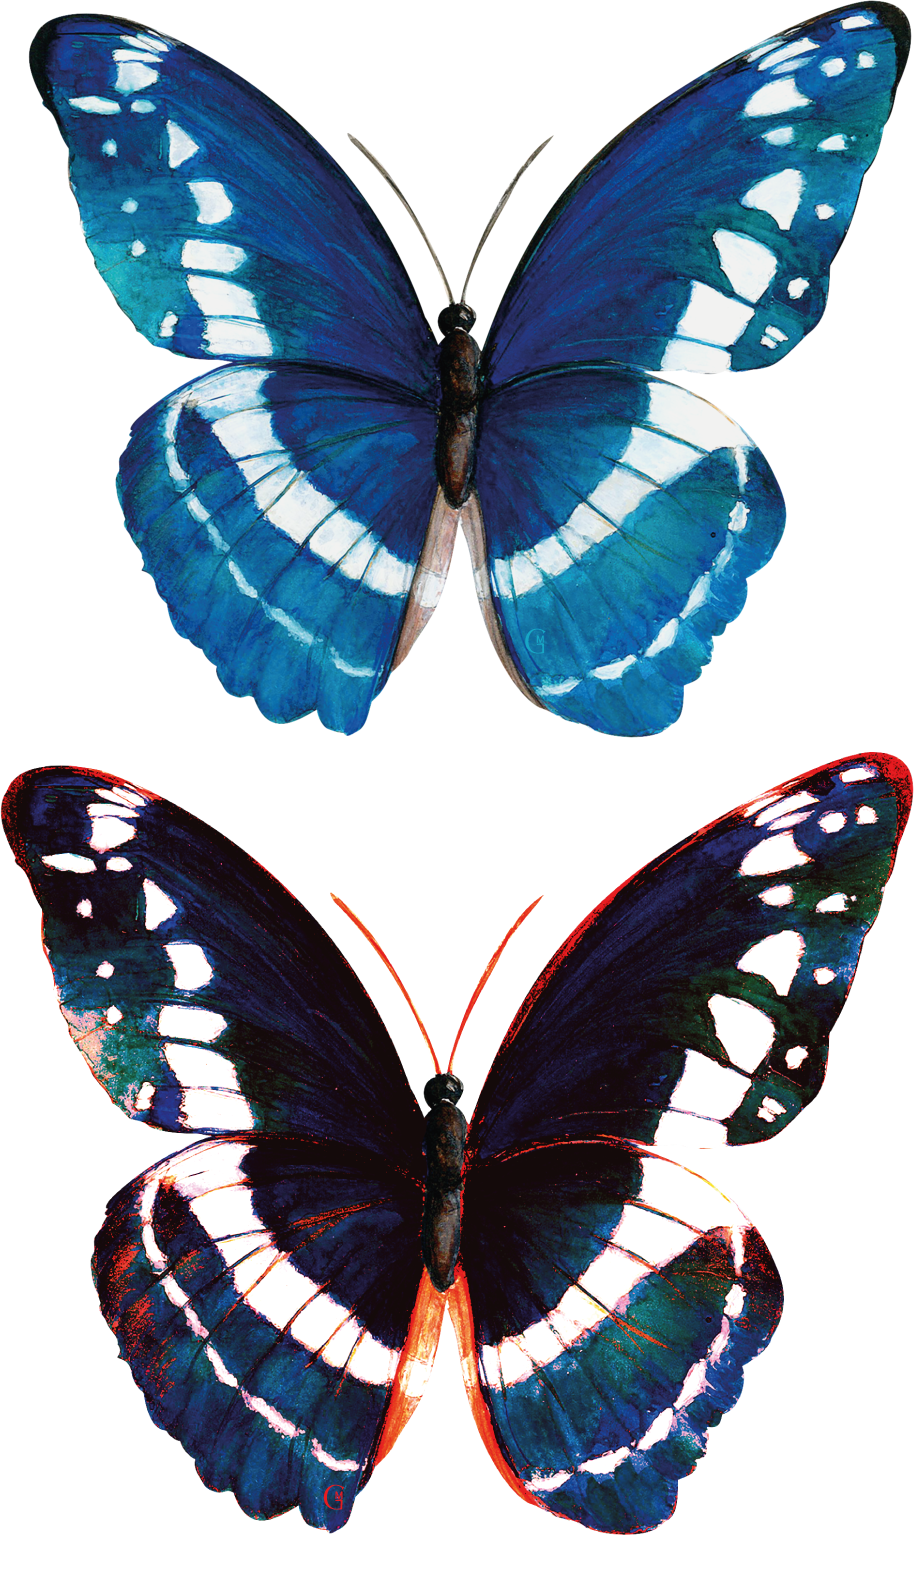 2 Papillons bleus